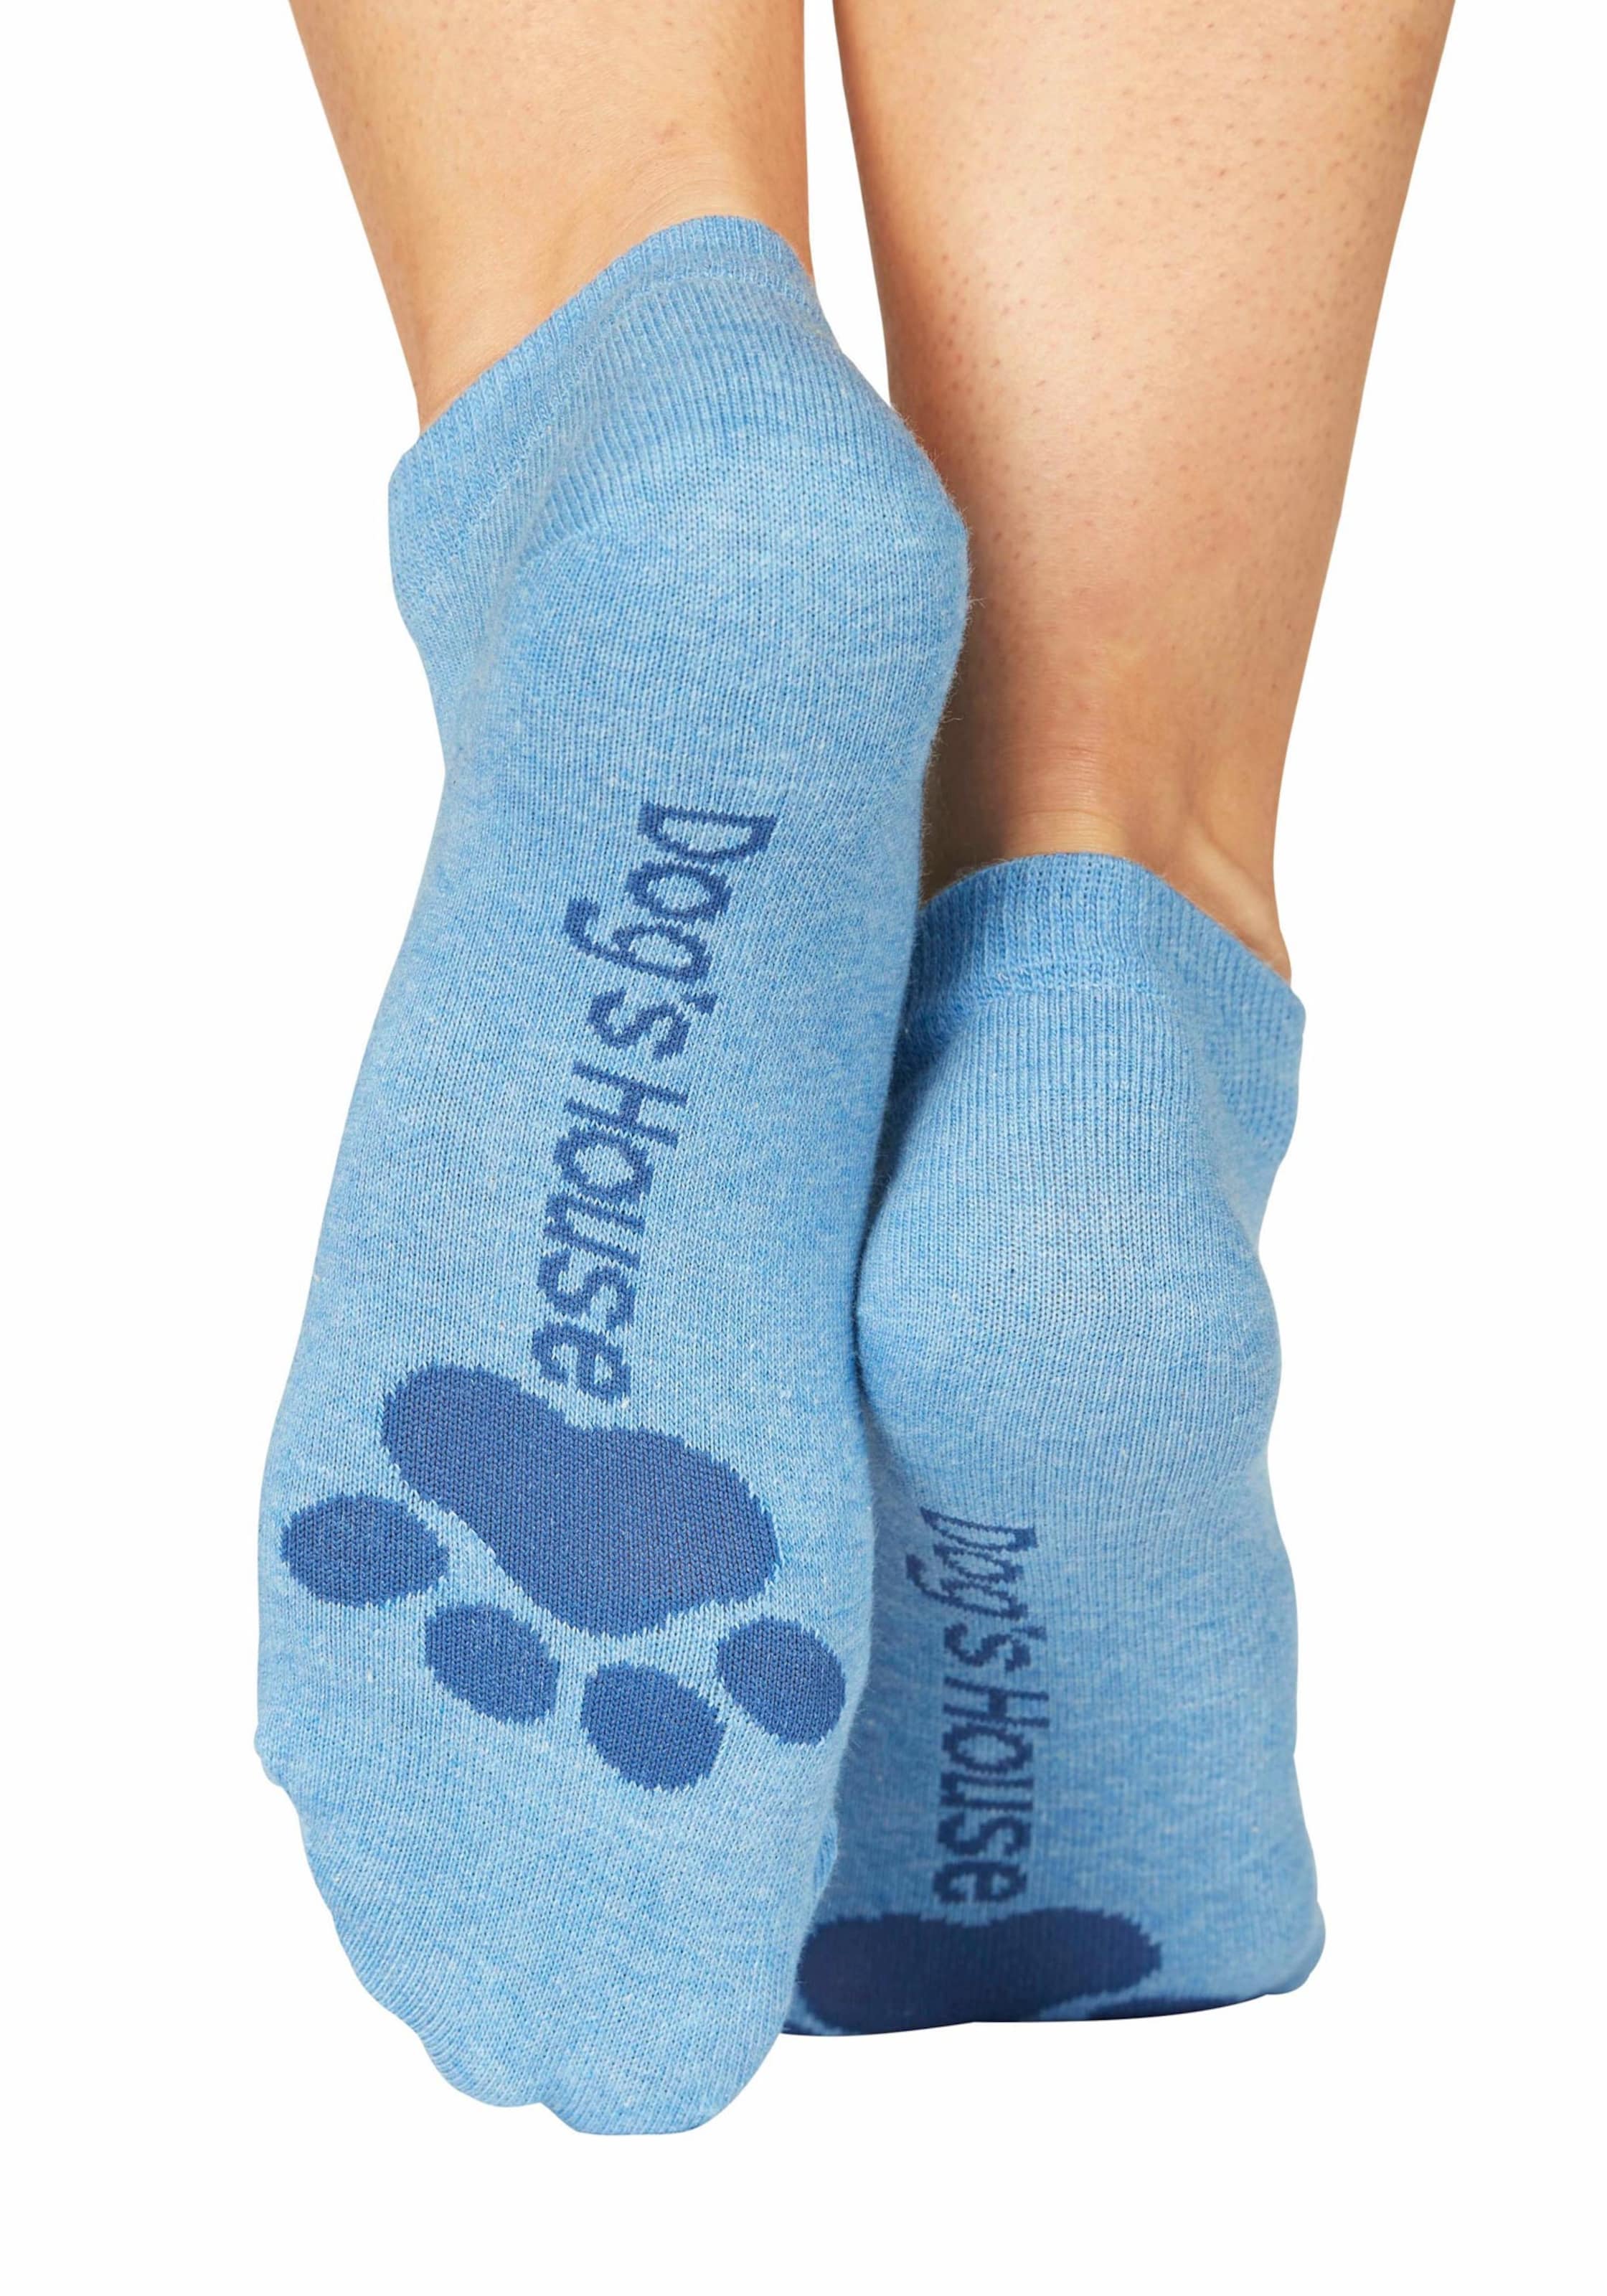 Wäsche Strümpfe & Socken Arizona Sneakersocken in 1x blau + 1x grau-meliert + 1x dunkelblau + 1x dunkelgrau 